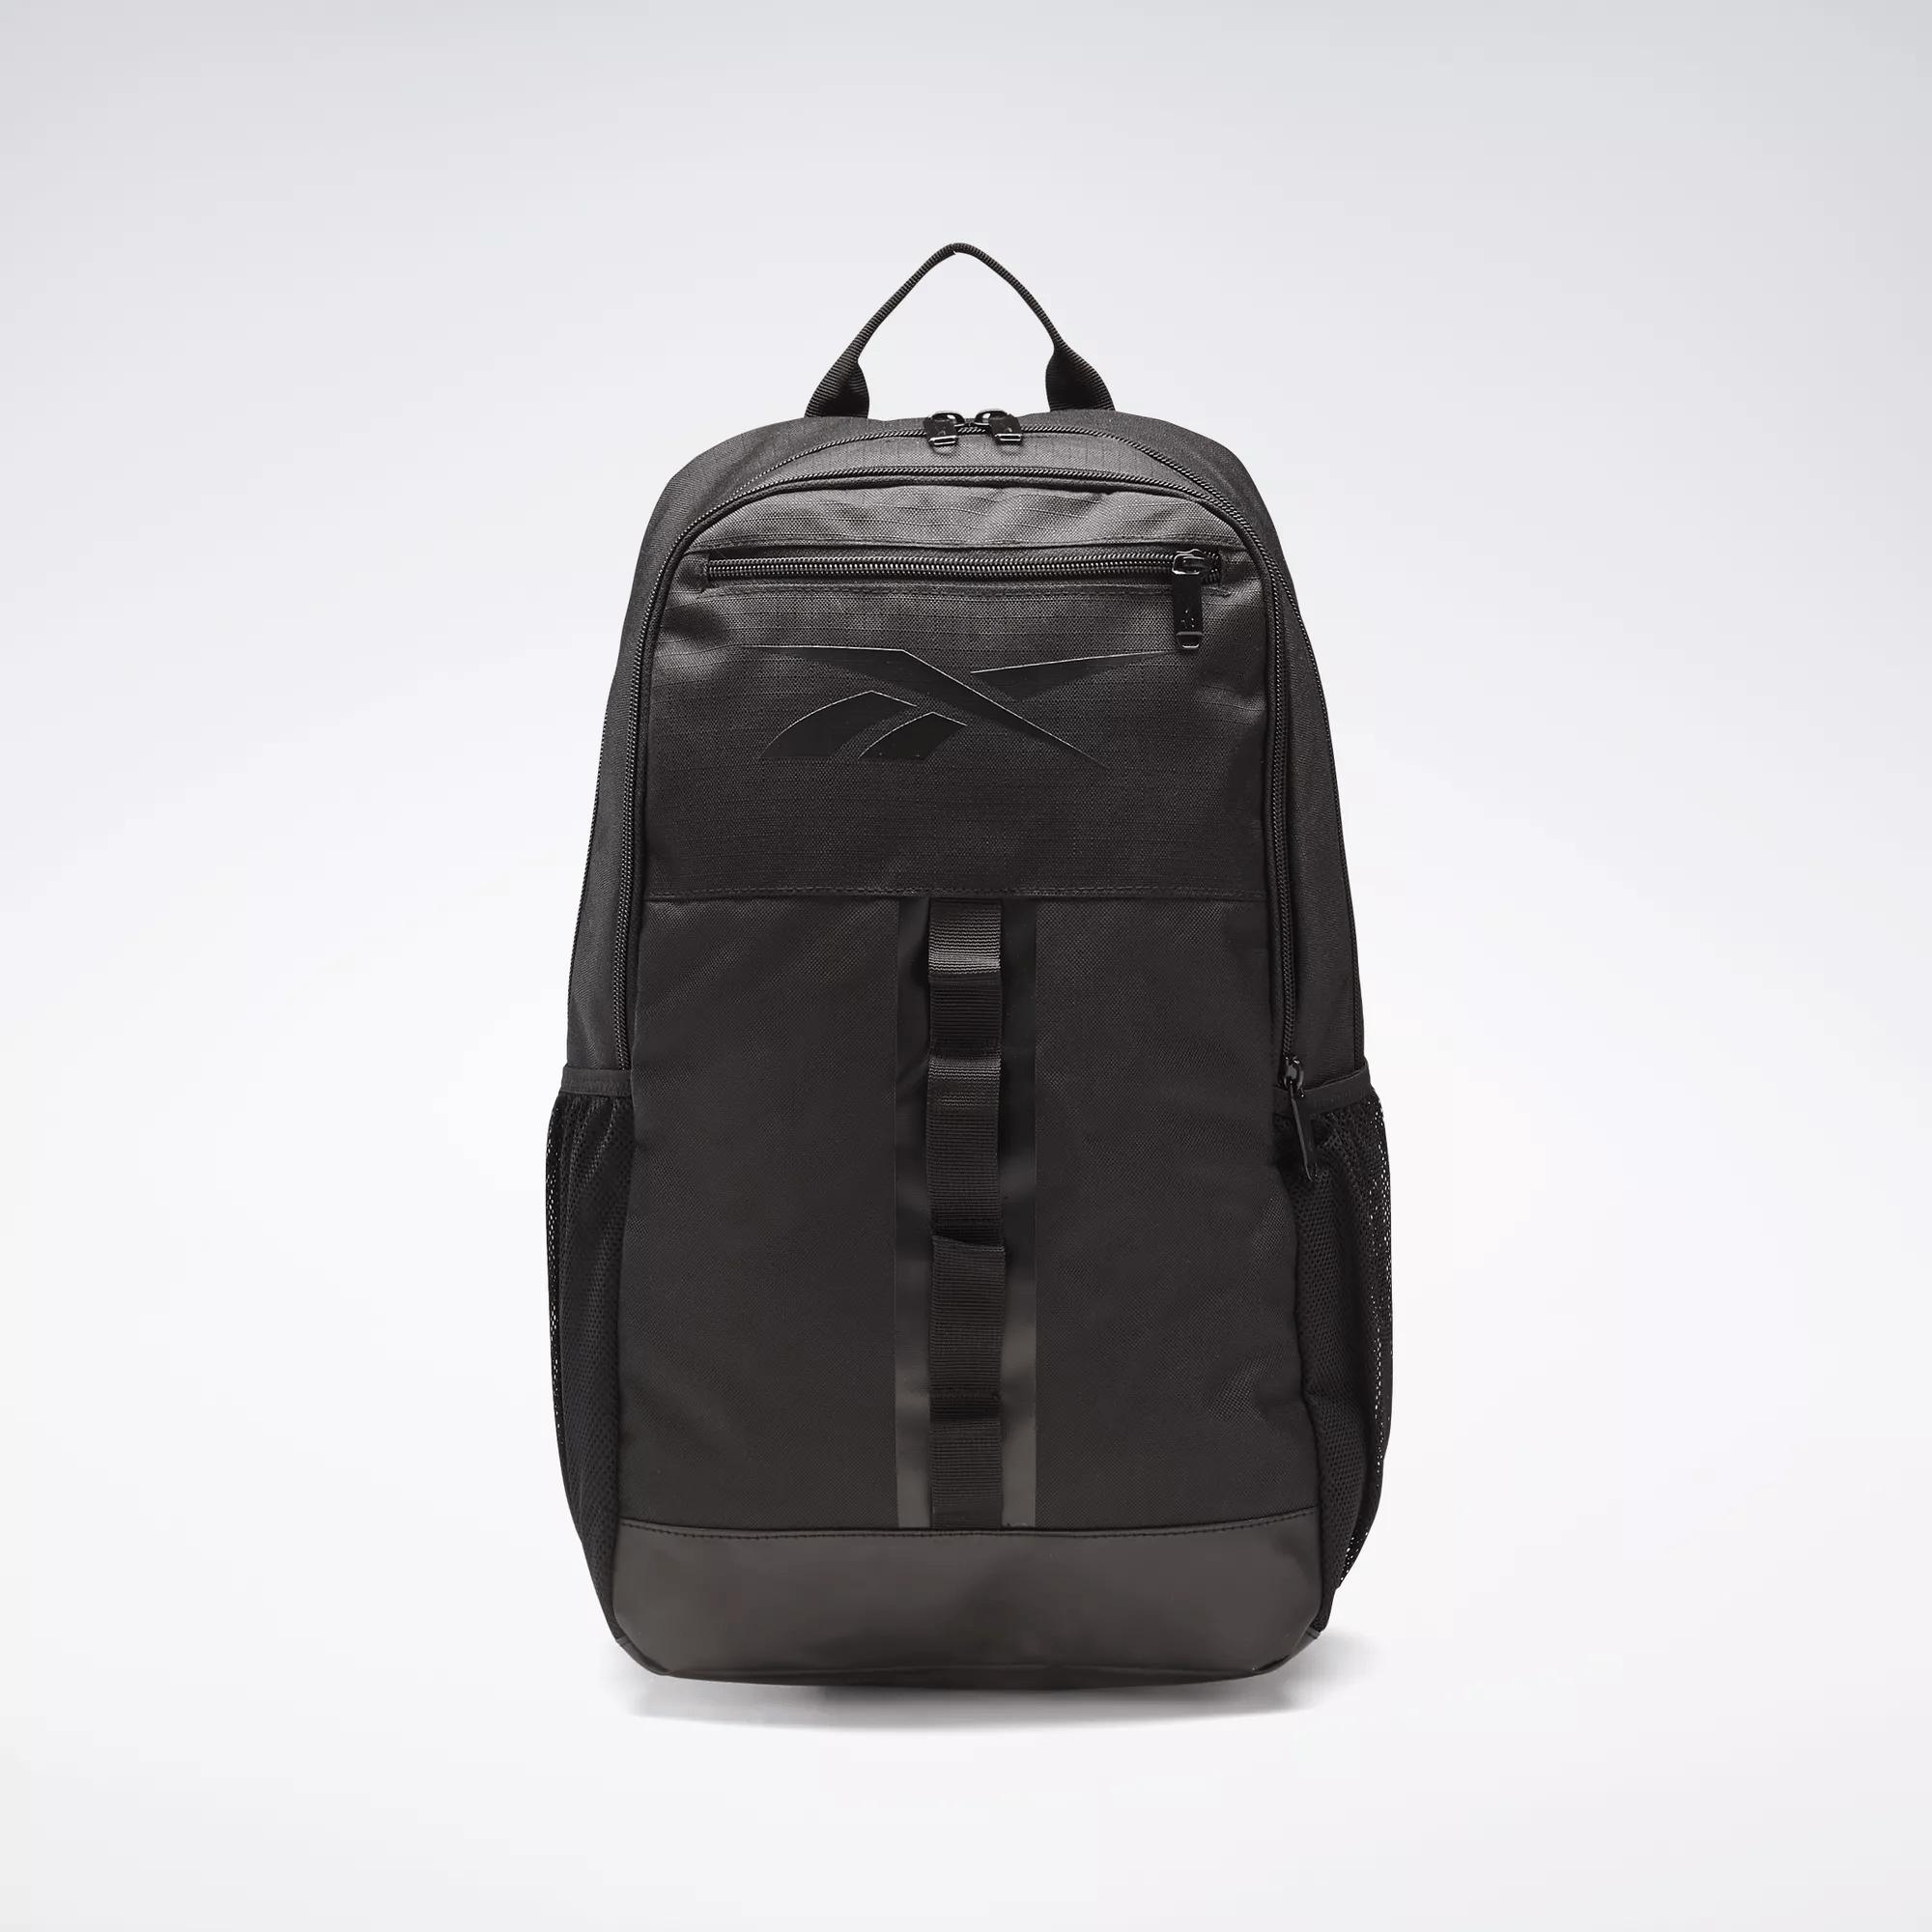 Reebok Backpack School/Commuter Bag | Commuter bag, Bags, School backpacks